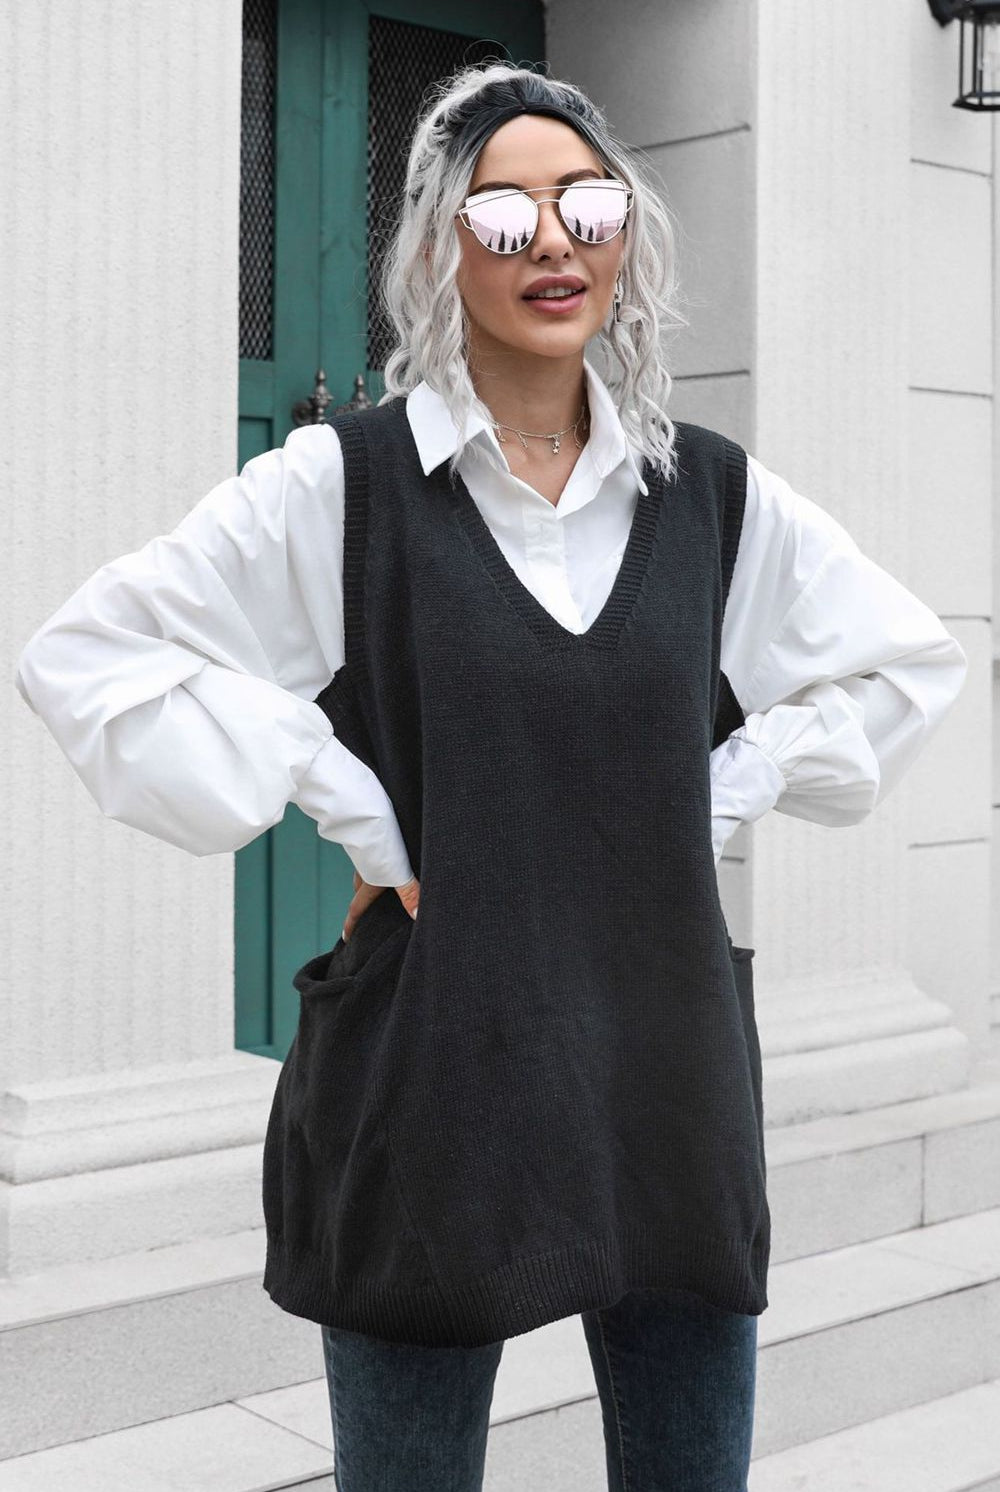 Dark Slate Gray V-Neck Sleeveless Sweater Vest with Pocket Clothing